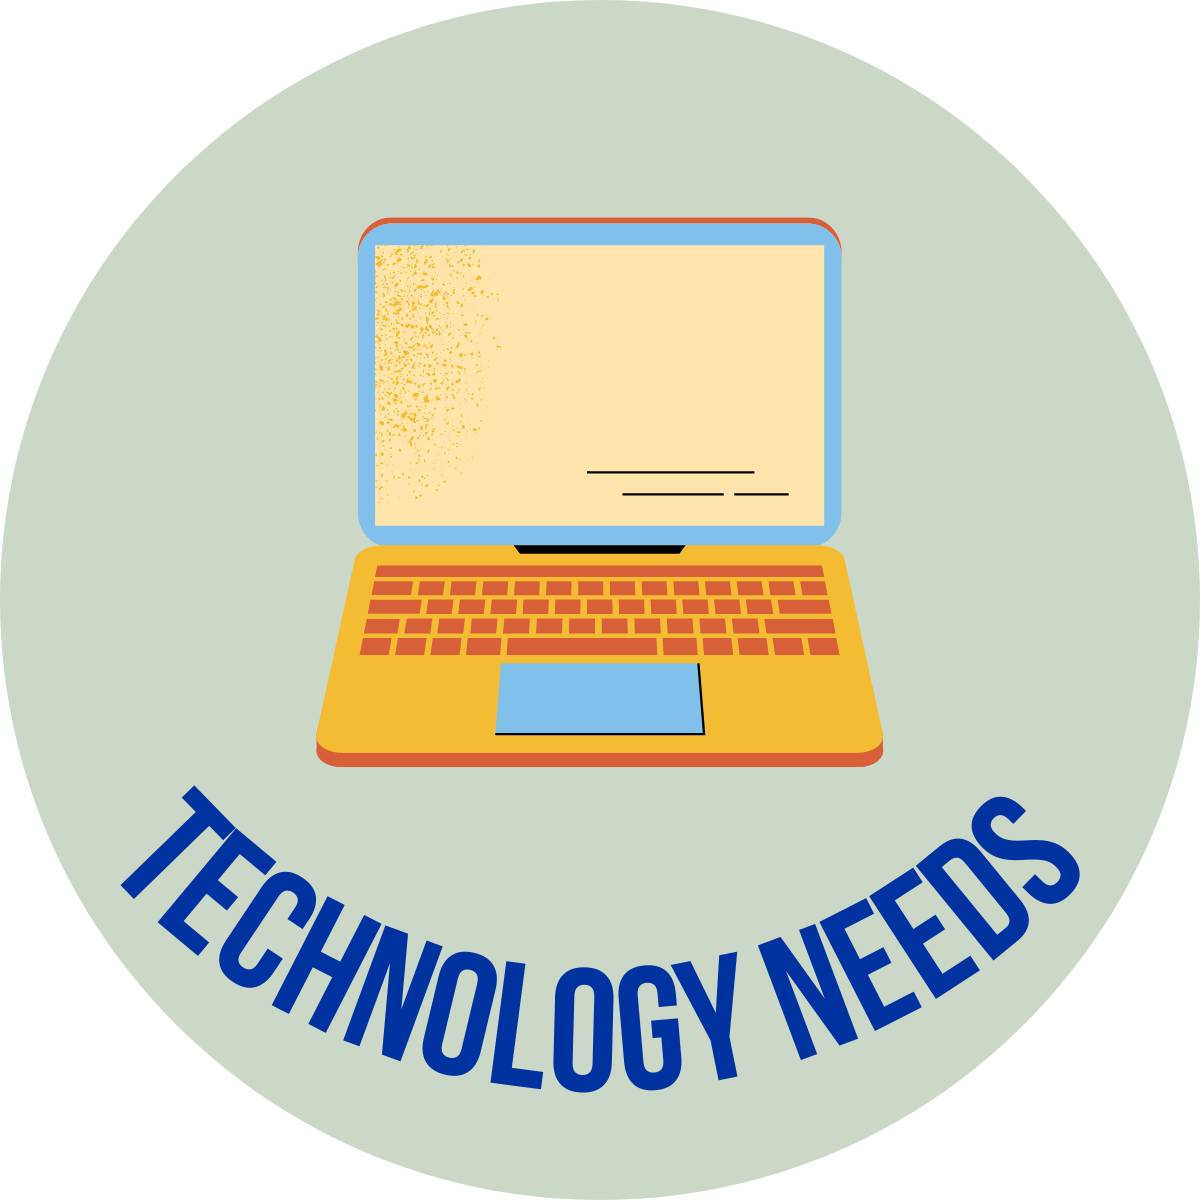 Technology needs